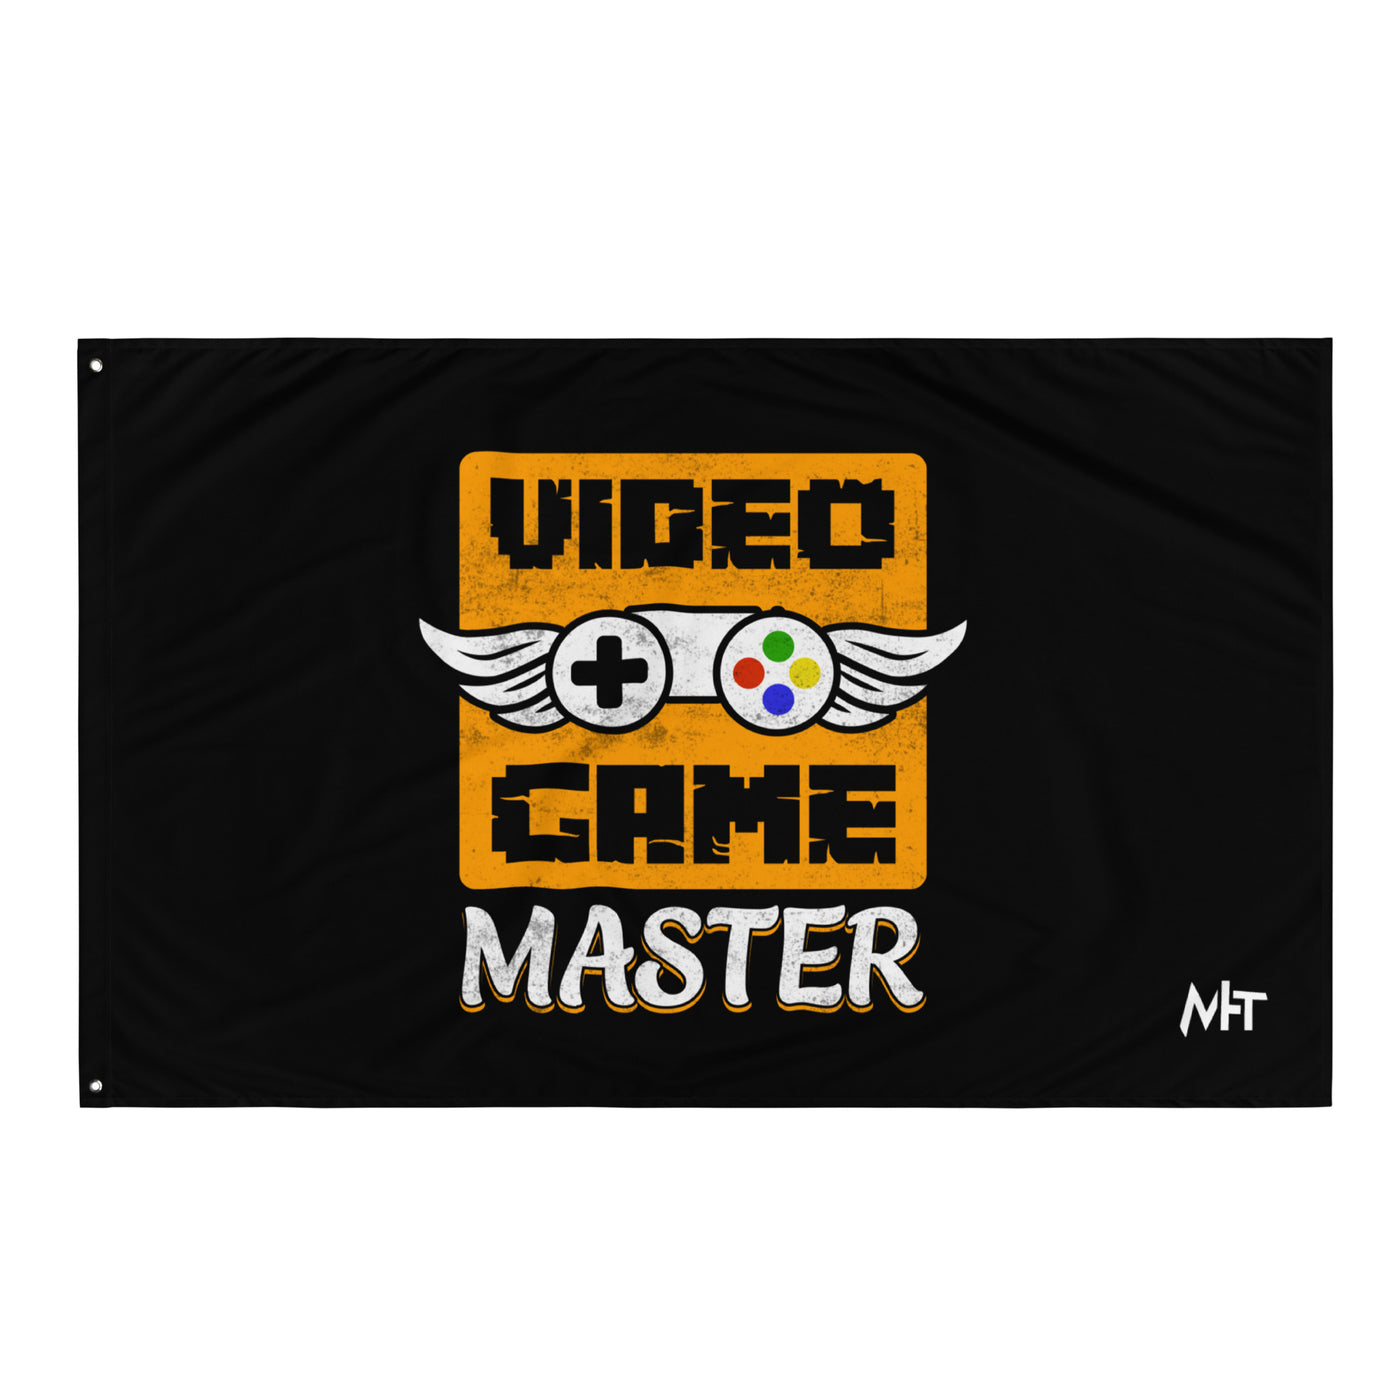 VIDEO GAME MASTER (MAHFUZ) - Flag